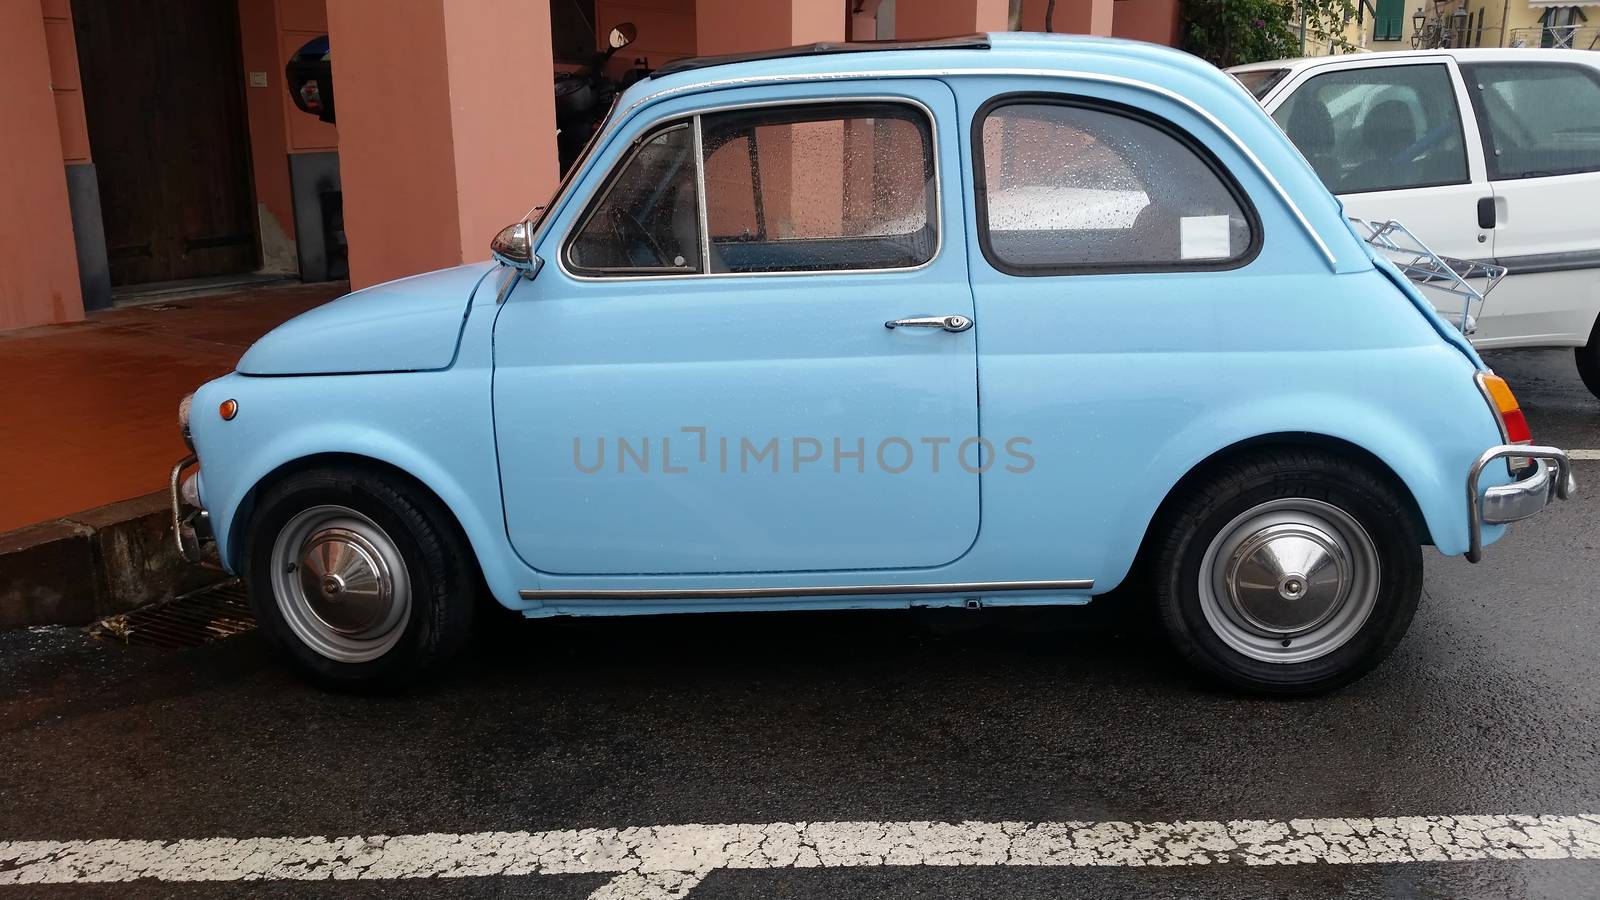 Ventimiglia, Italy - October 23, 2016: Small Italian Car Fiat 500 Parked on the Street of Ventimiglia. Blue Fiat 500 L